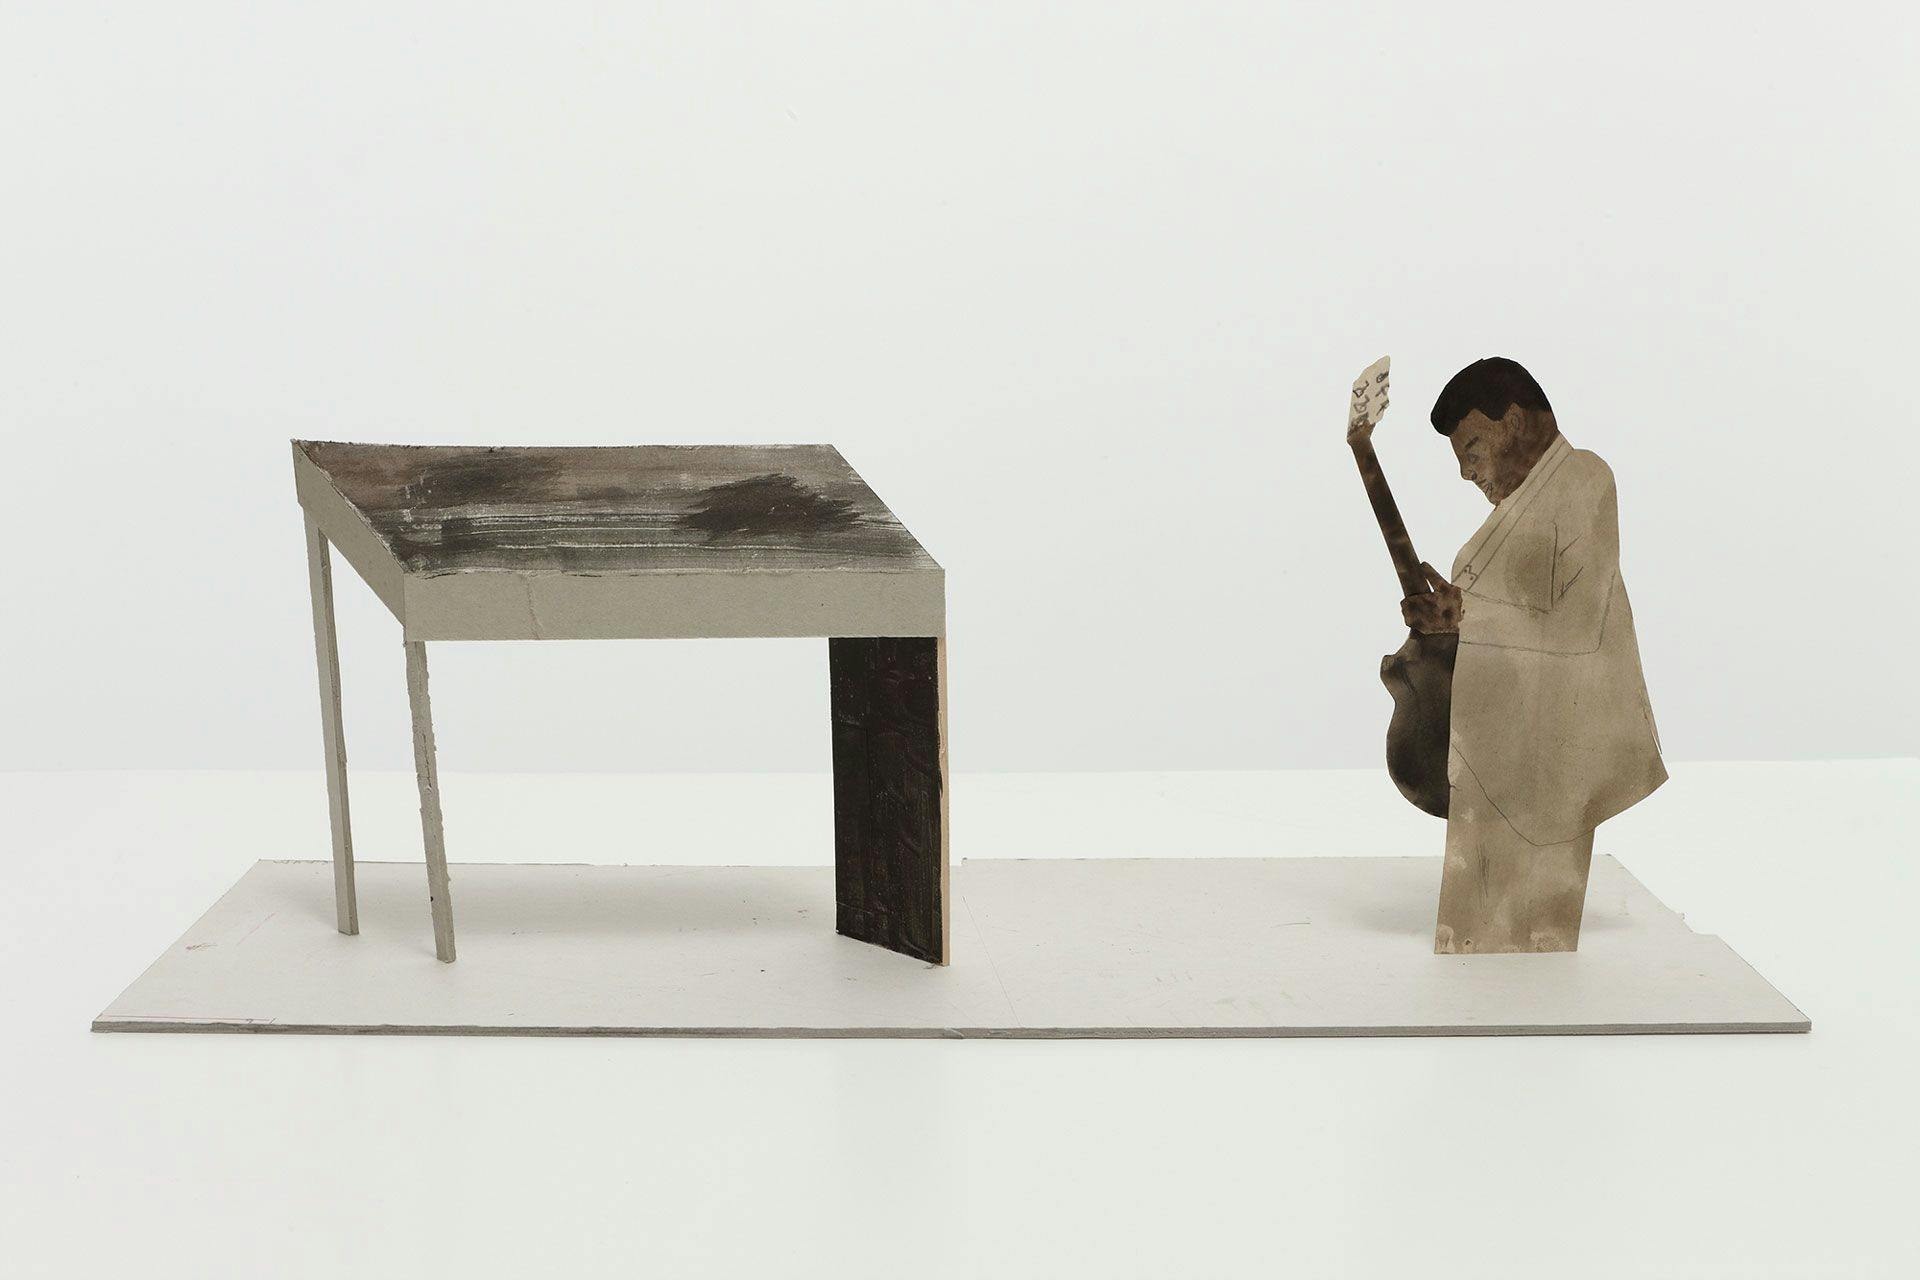 A sculpture by Jockum Nordstr√∂m, titled Untitled (Guitarist), dated 2010.